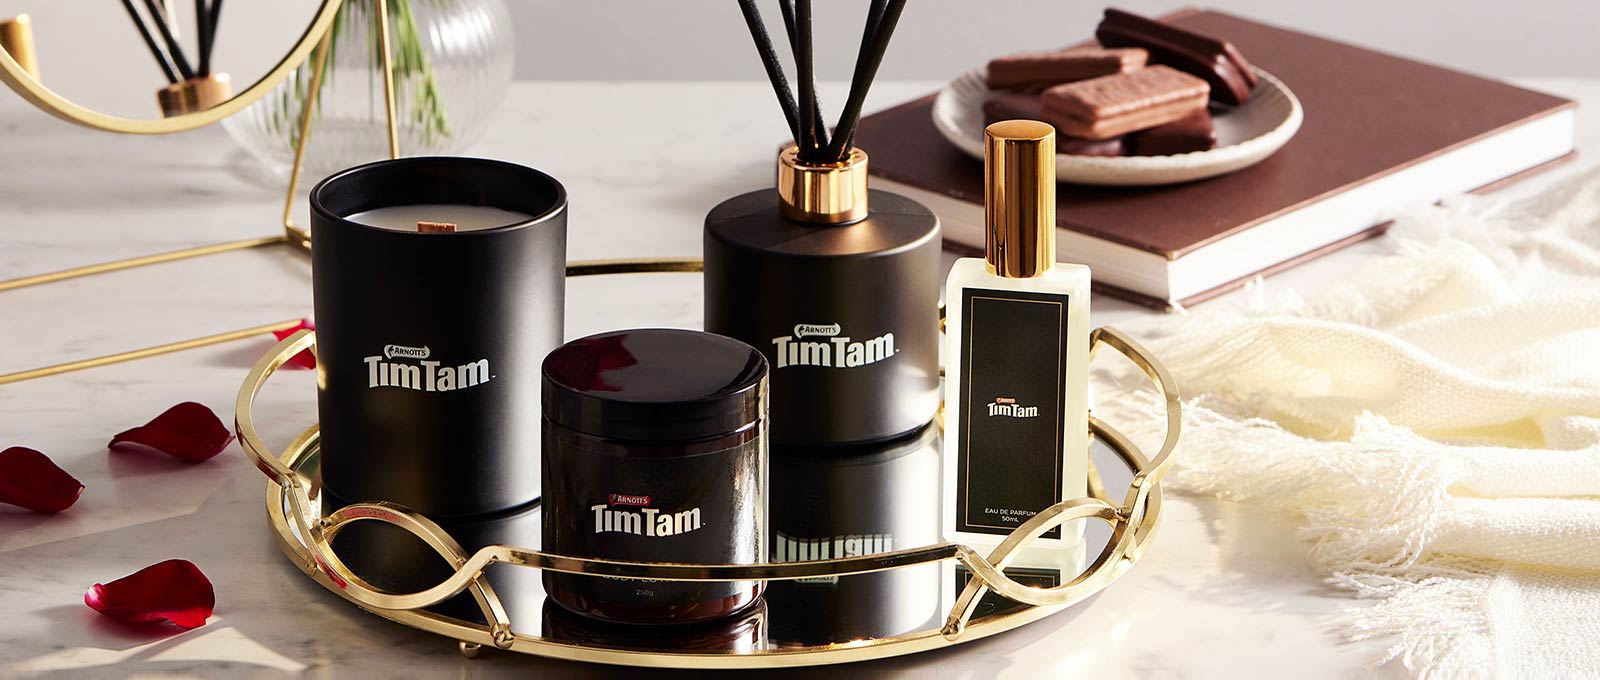 Carousel Image for Tim Tam merchandise range, including Tim Tam Candle, Tim Tam Perfume, Tim Tam Body Lotion